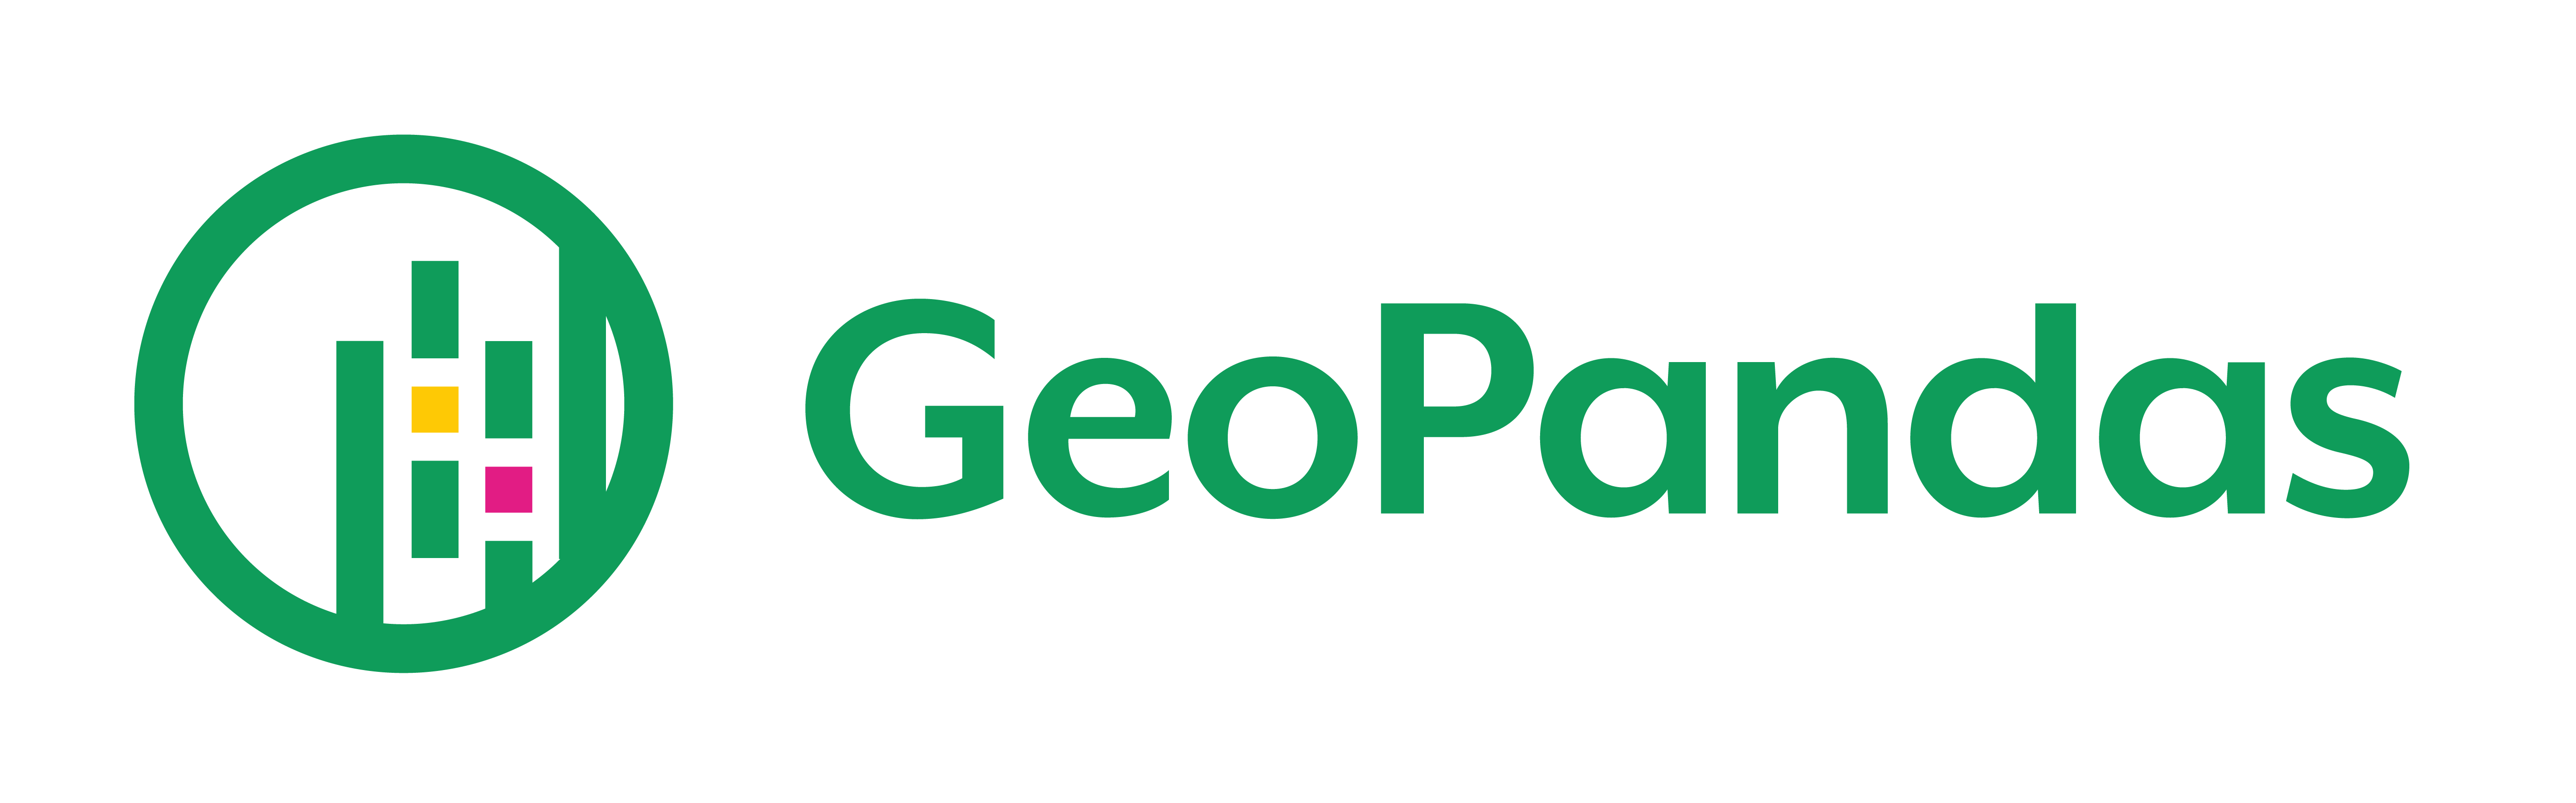 GeoPandas Logo